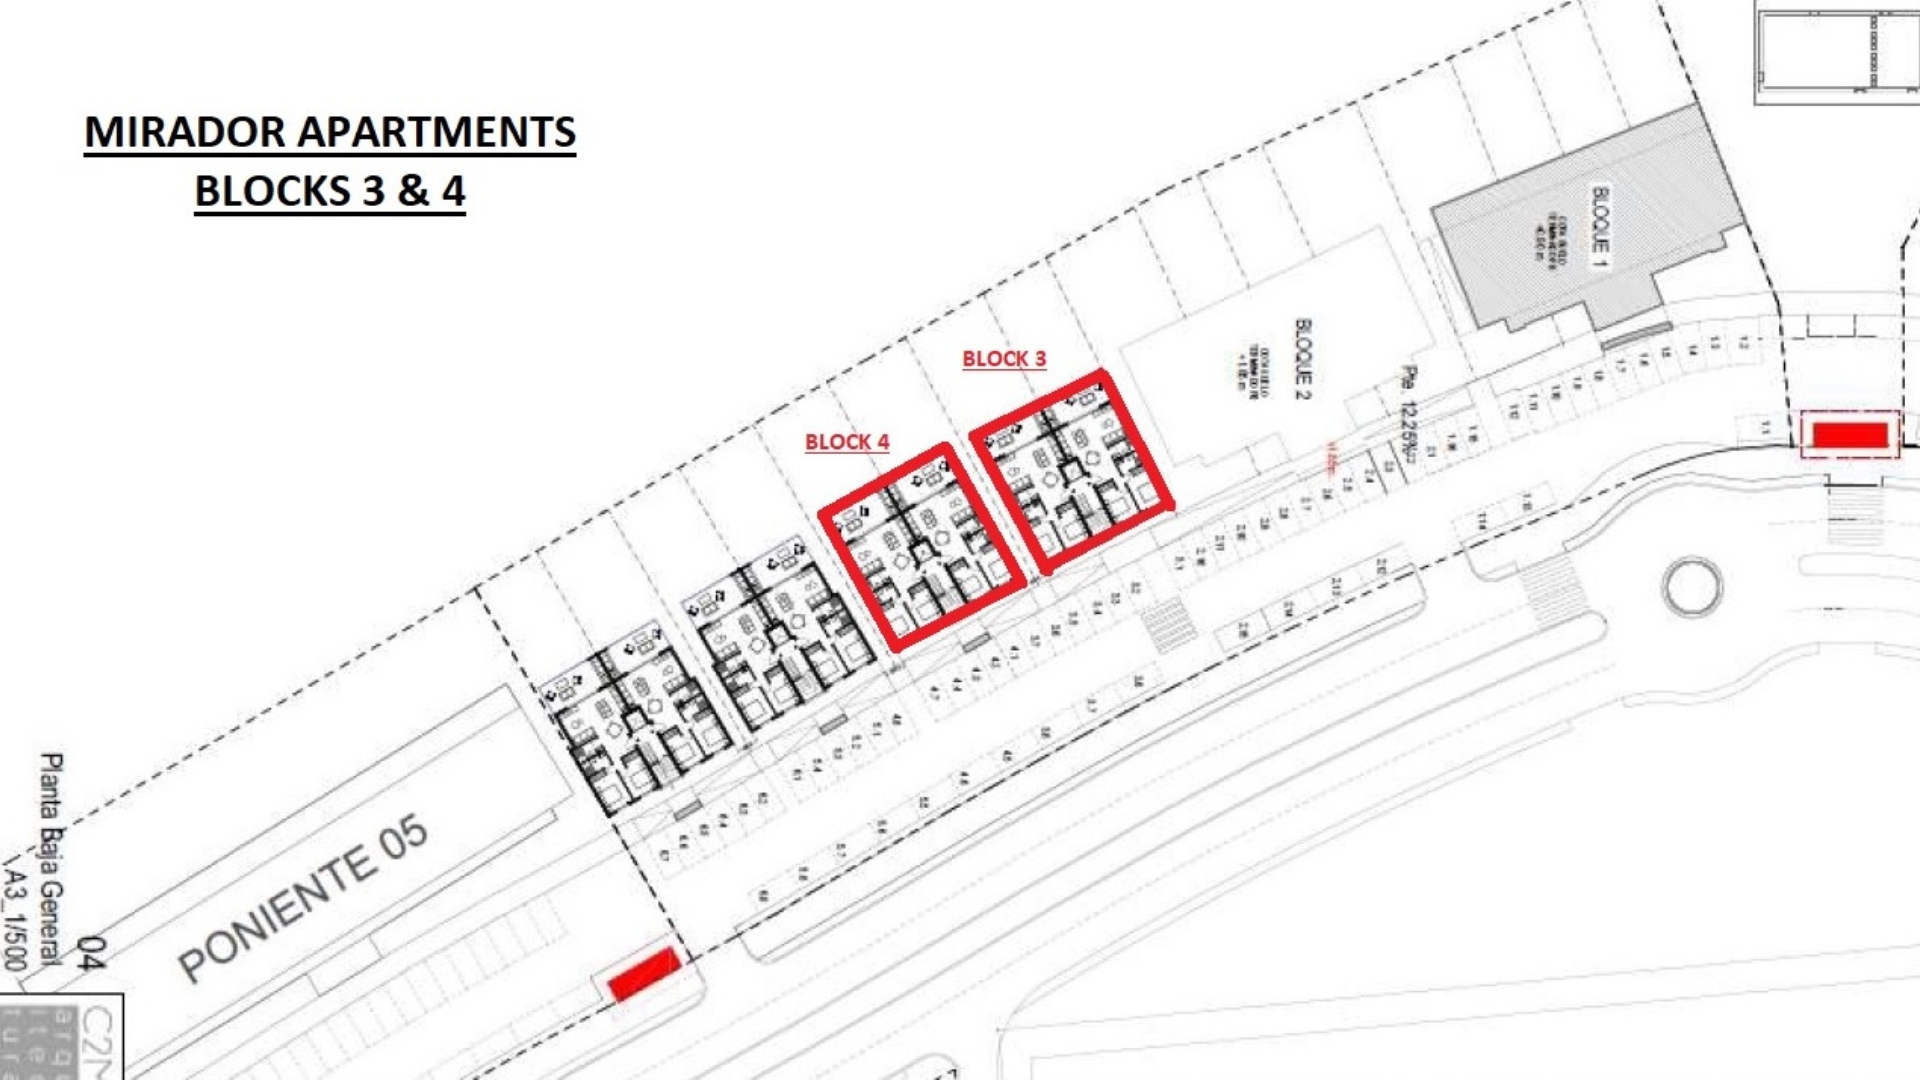 Floor plan for Apartment ref 3918 for sale in Condado De Alhama Spain - Quality Homes Costa Cálida